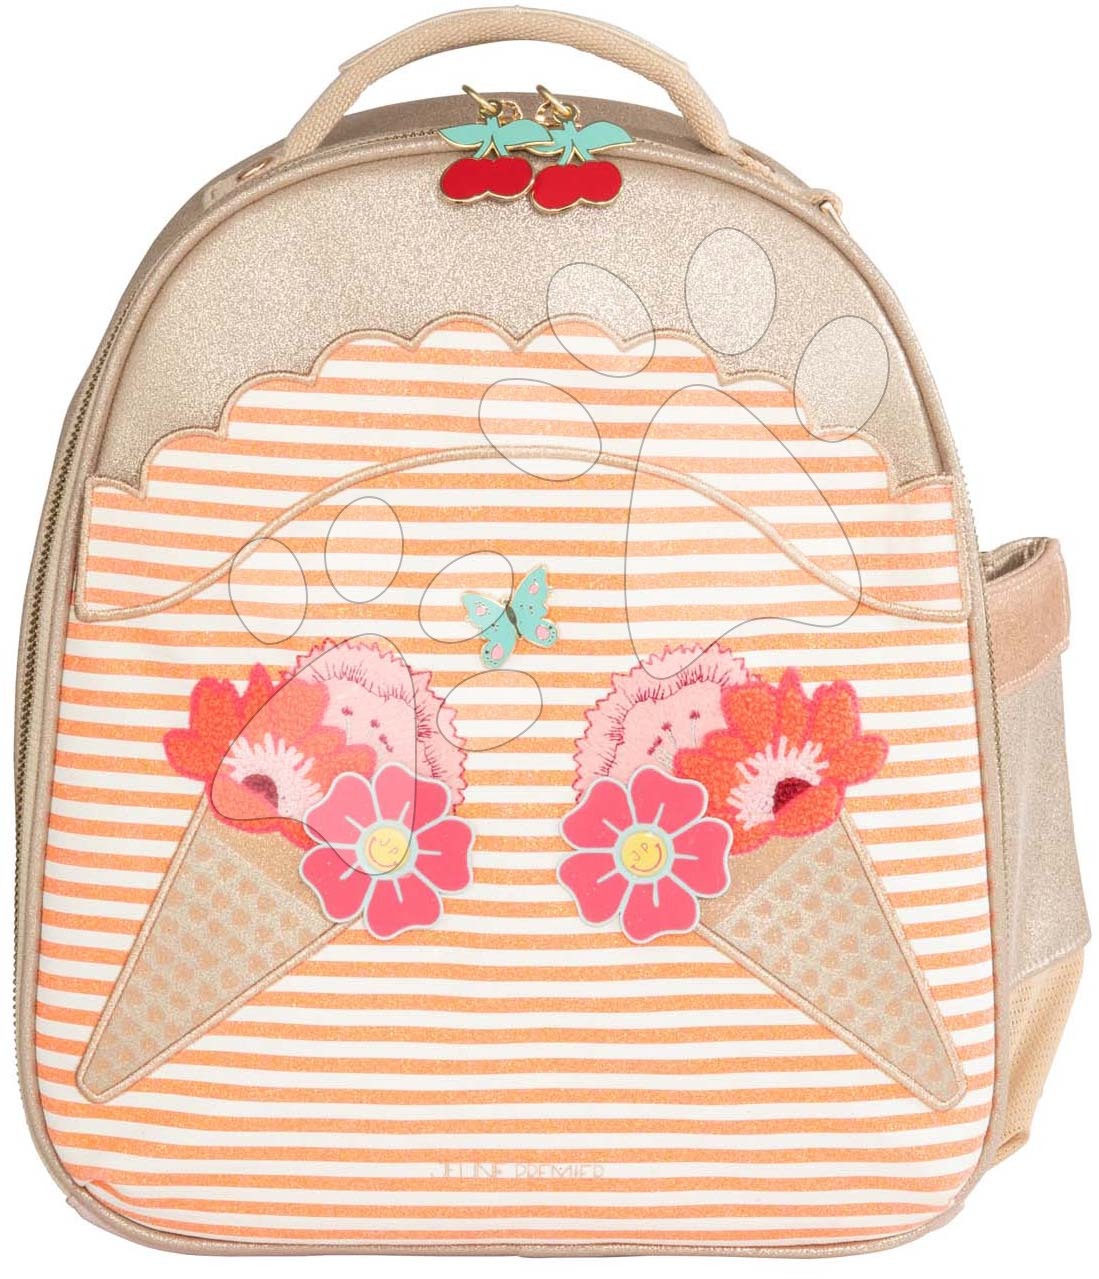 Školské tašky a batohy - Školská taška batoh Backpack Ralphie Croisette Cornette Jeune Premier ergonomický luxusné prevedenie 31*27 cm